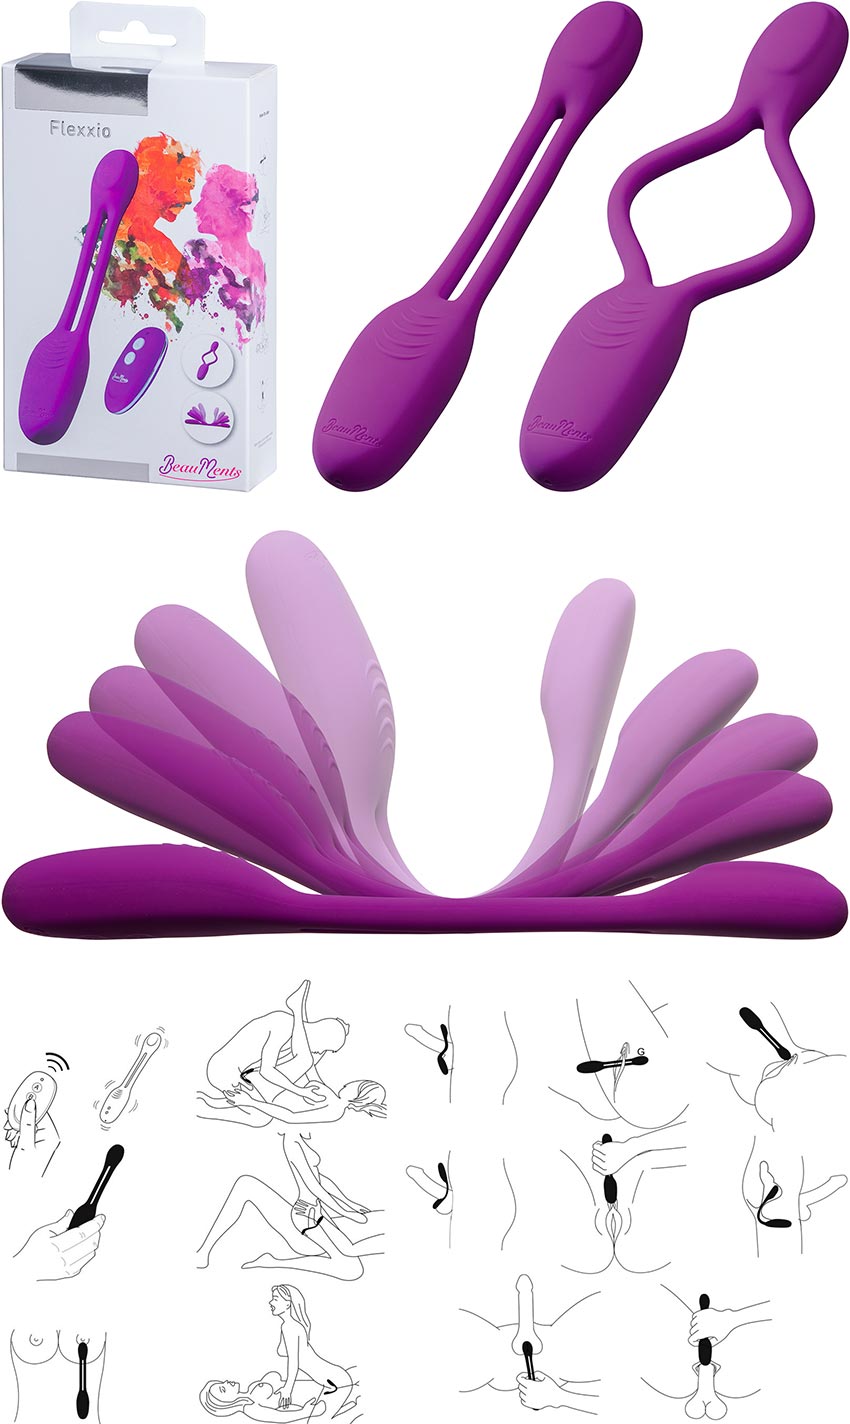 BeauMents Flexxio Couple Vibrator - Purple